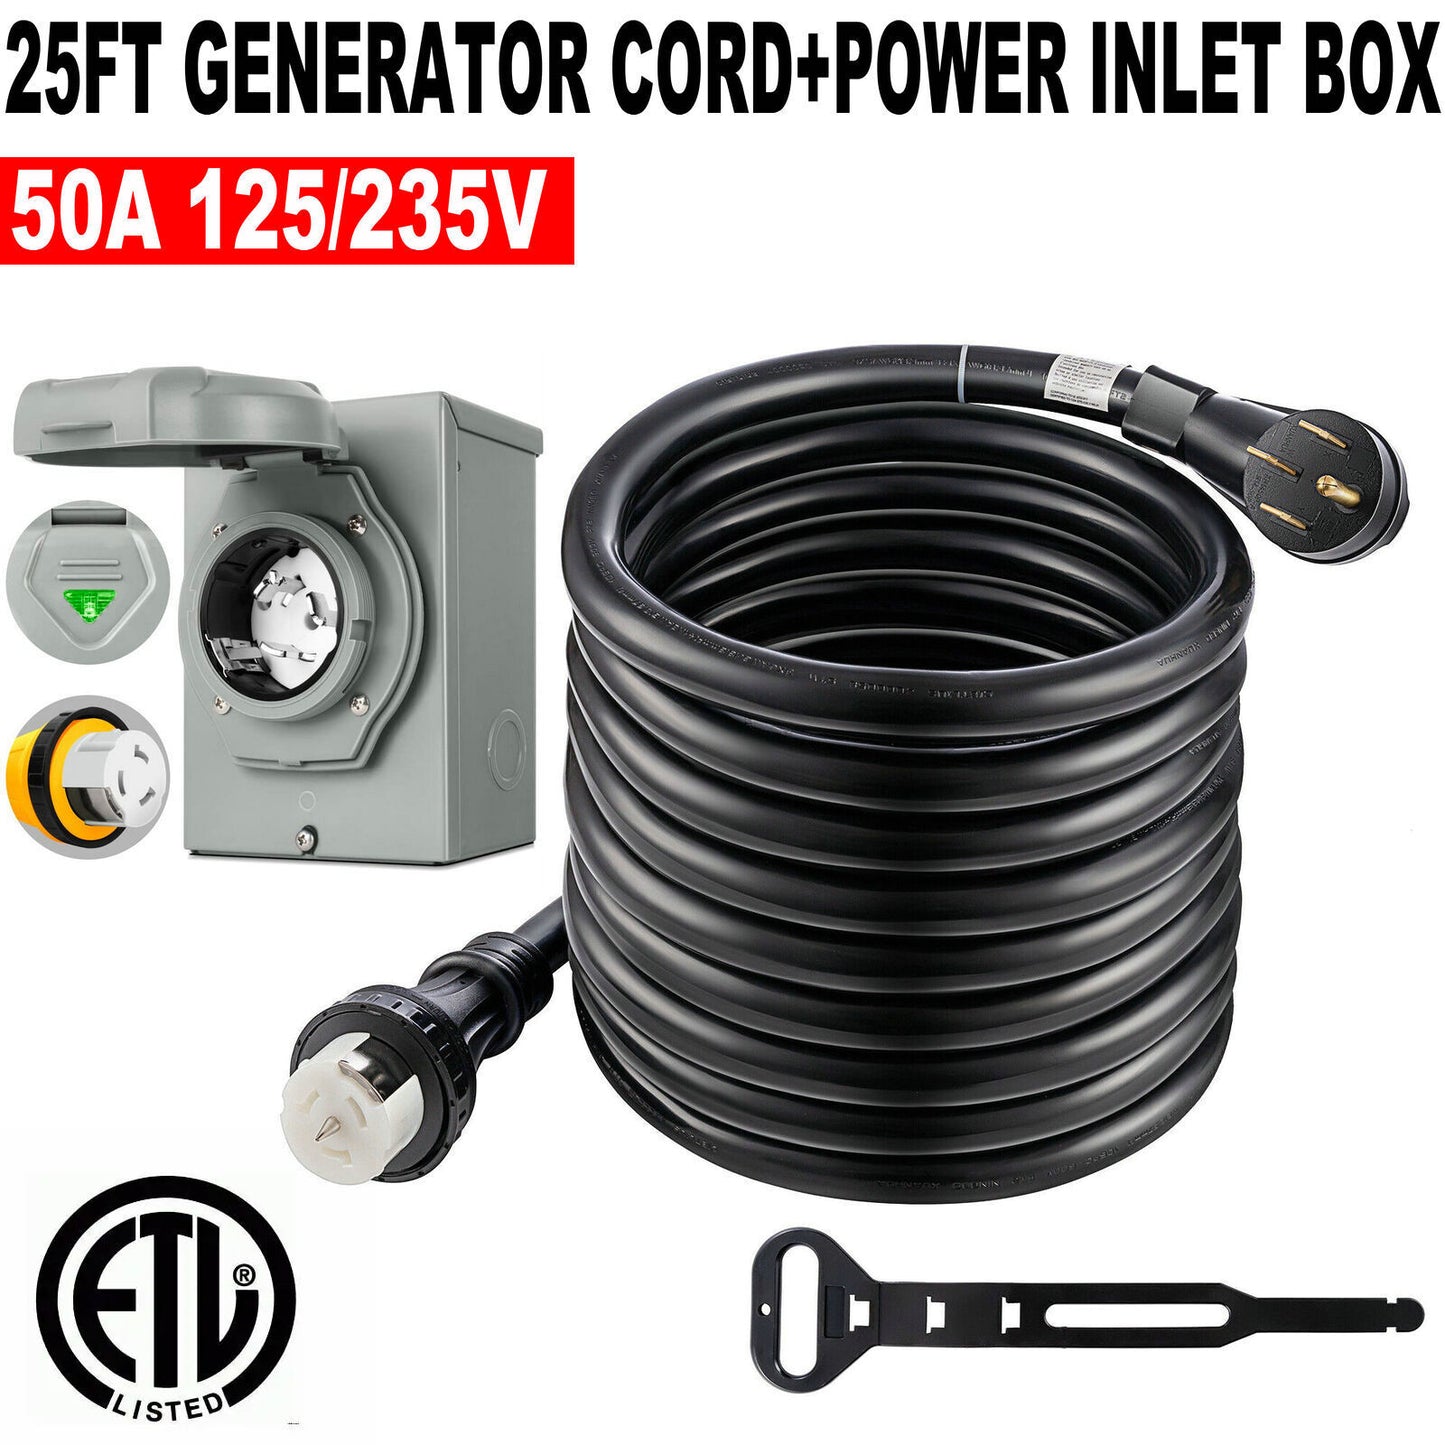 50 Amp 25FT Generator Cord+Power Inlet Box Waterproof Combo Kit NEMA 14-50P ETL